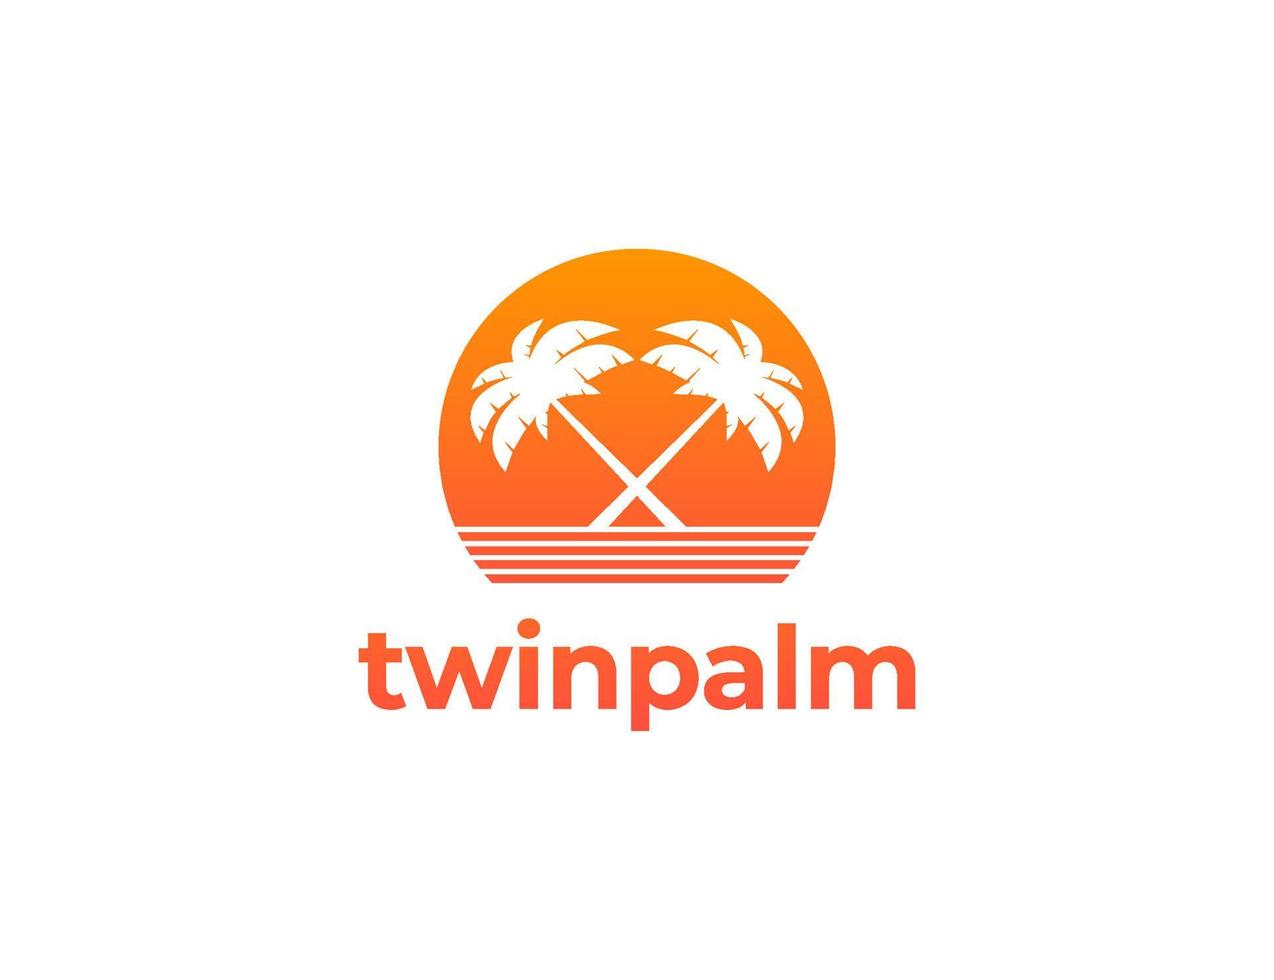 Twin palm tree logo illustration vector